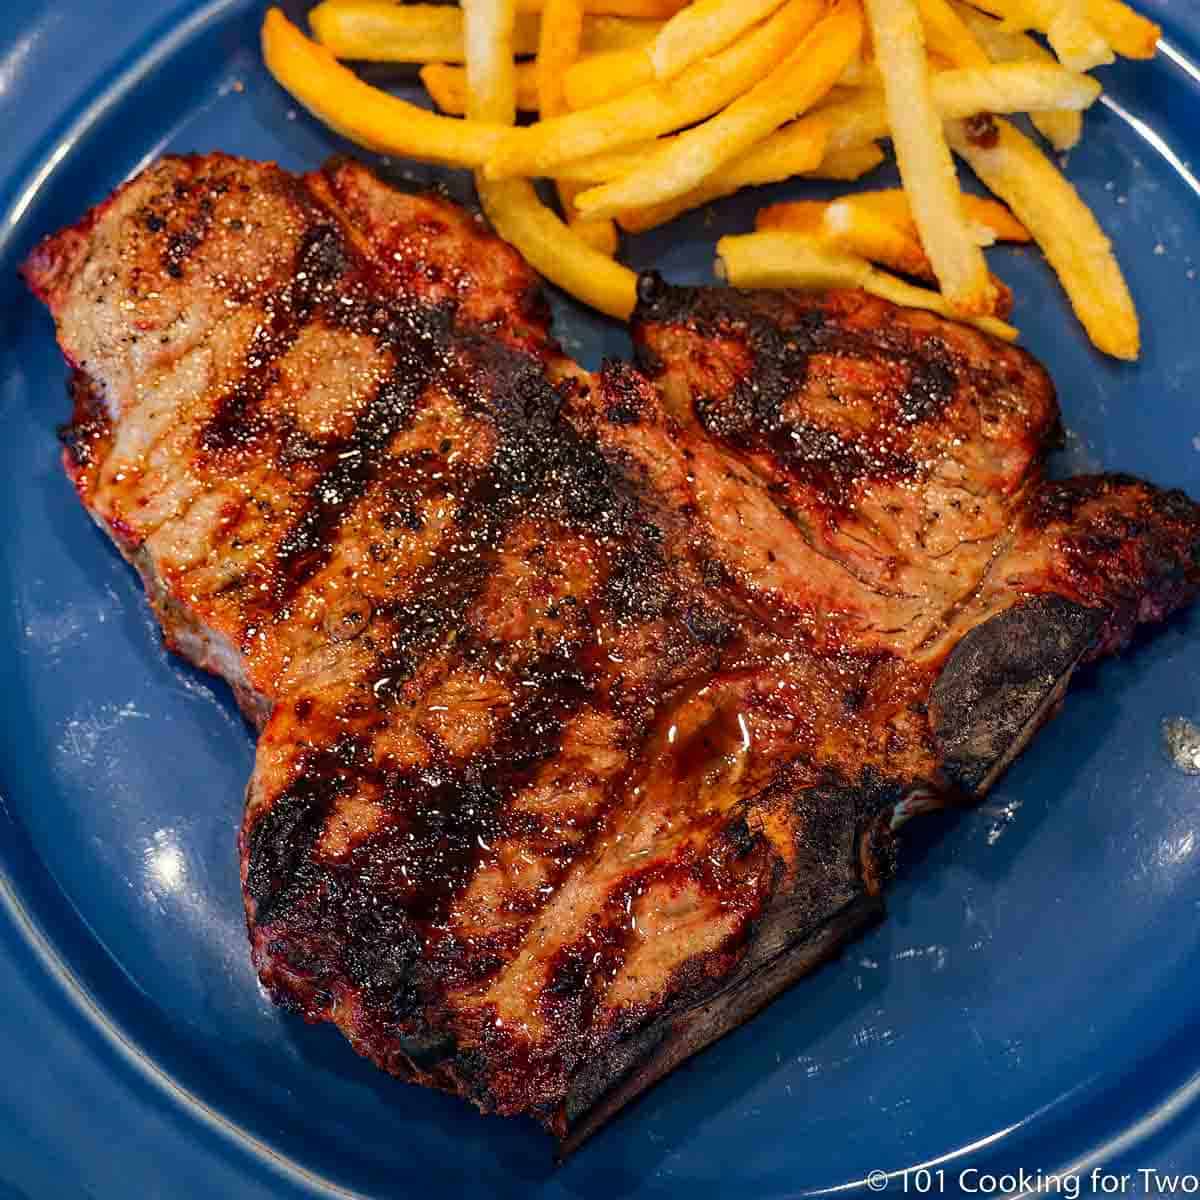 https://www.101cookingfortwo.com/wp-content/uploads/2023/01/perterhouse-steak-with-fries-on-blue-plate.jpg